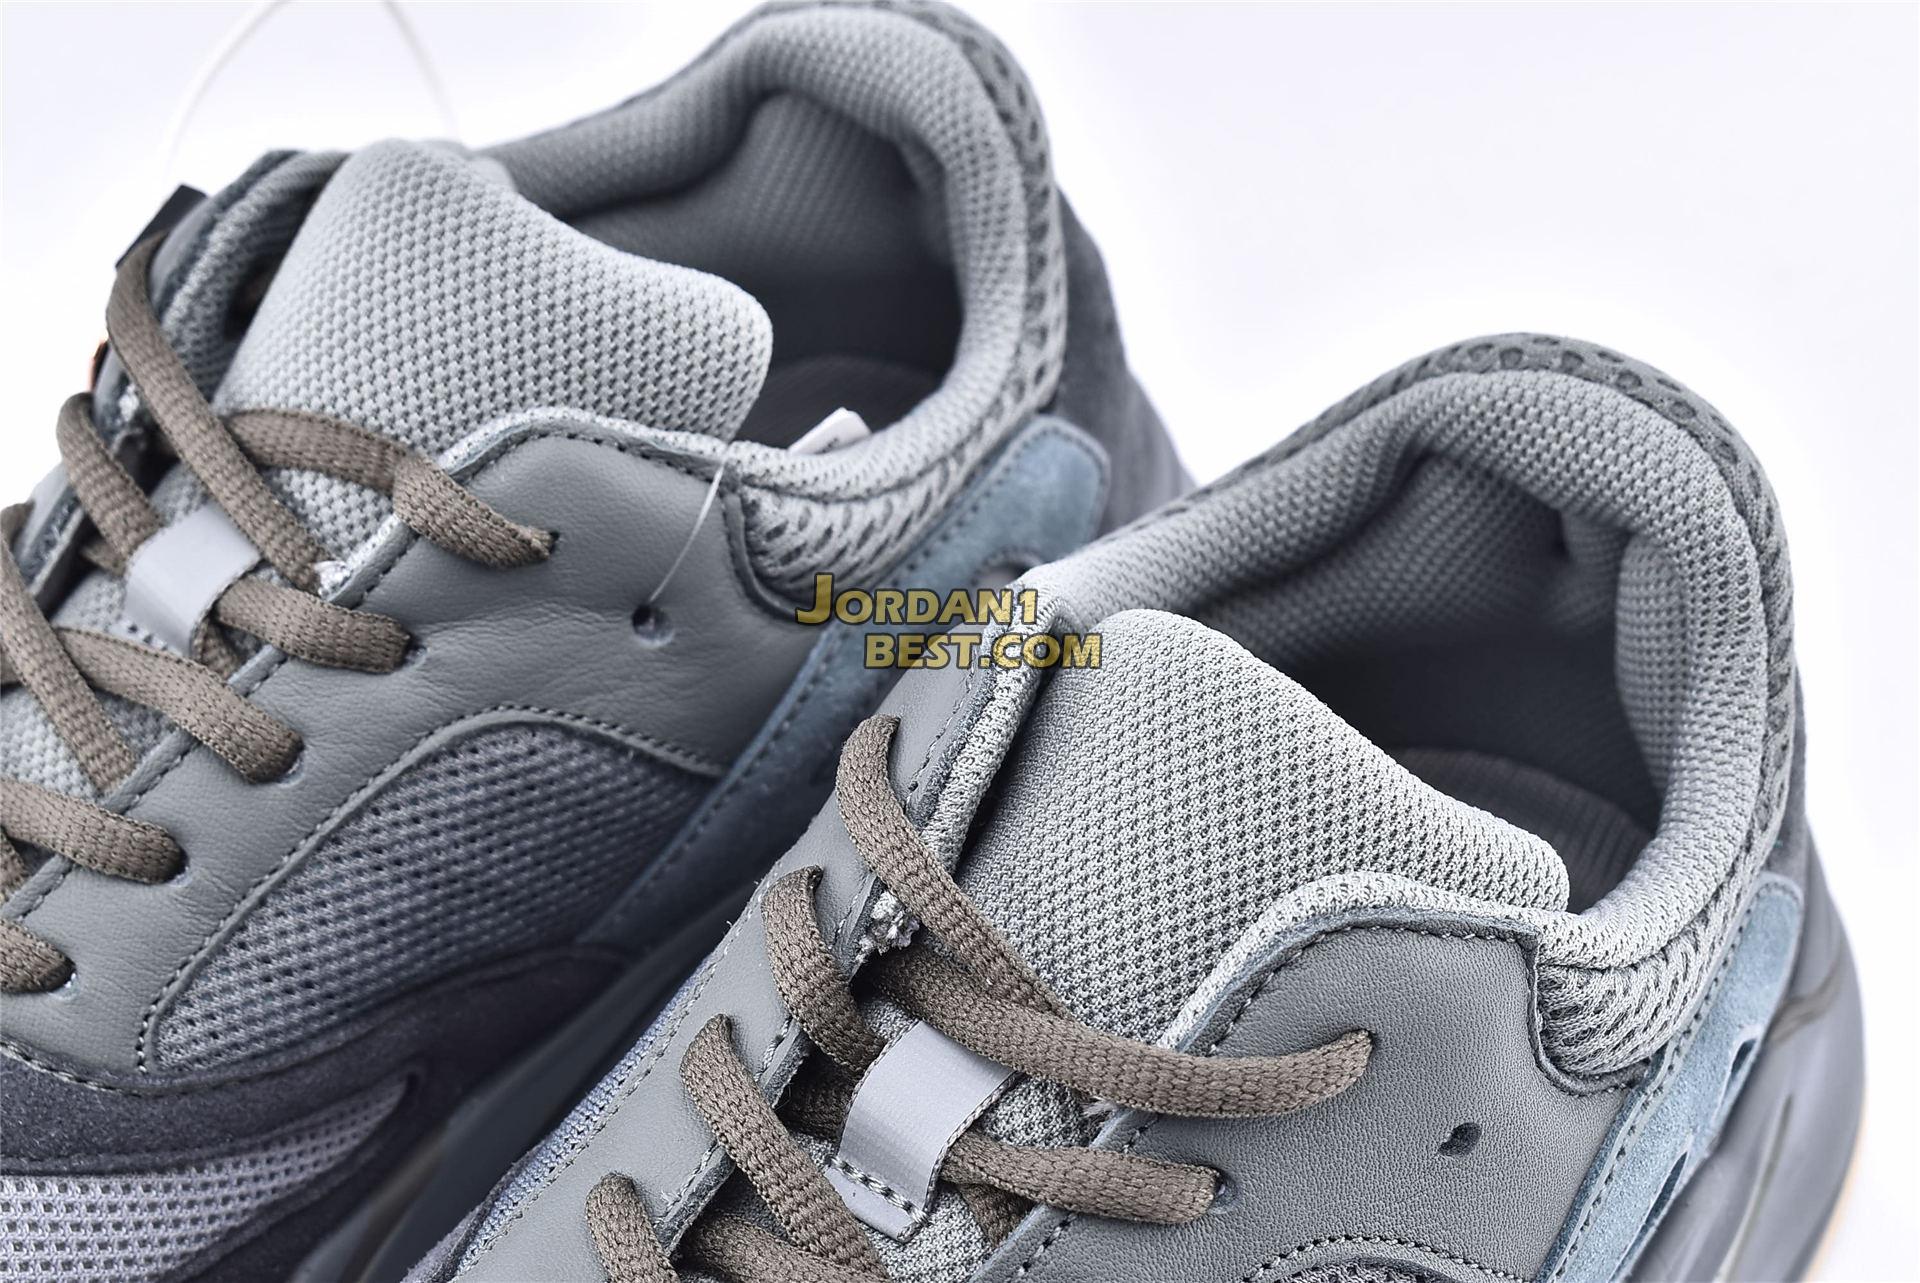 Adidas Yeezy Boost 700 "Teal Blue" FW2499